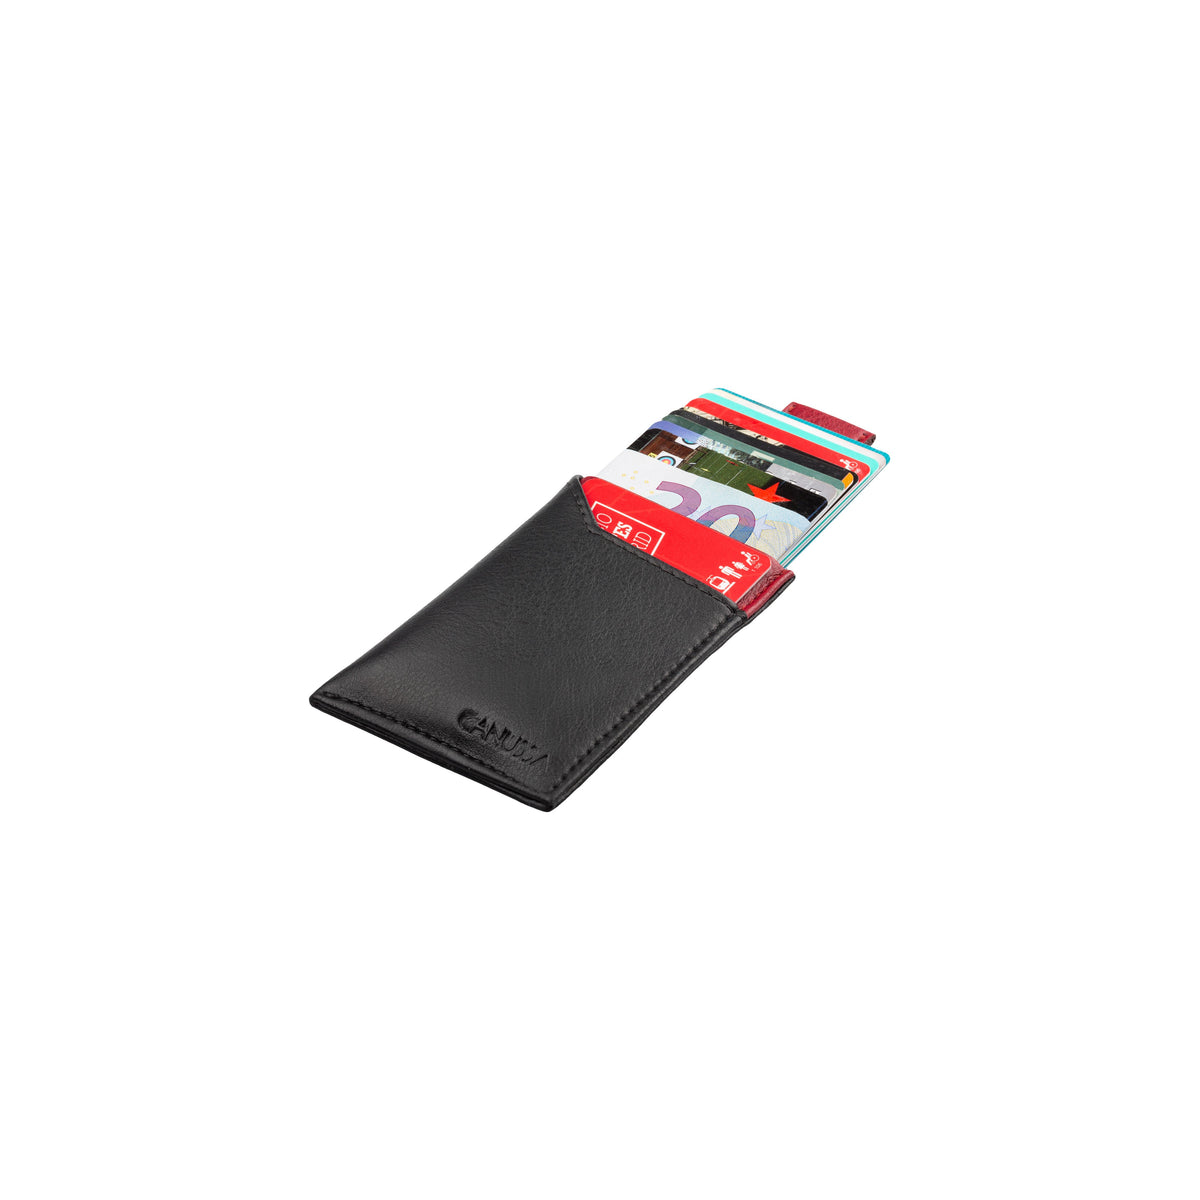 Slim Vegan Card holder - Black/Red